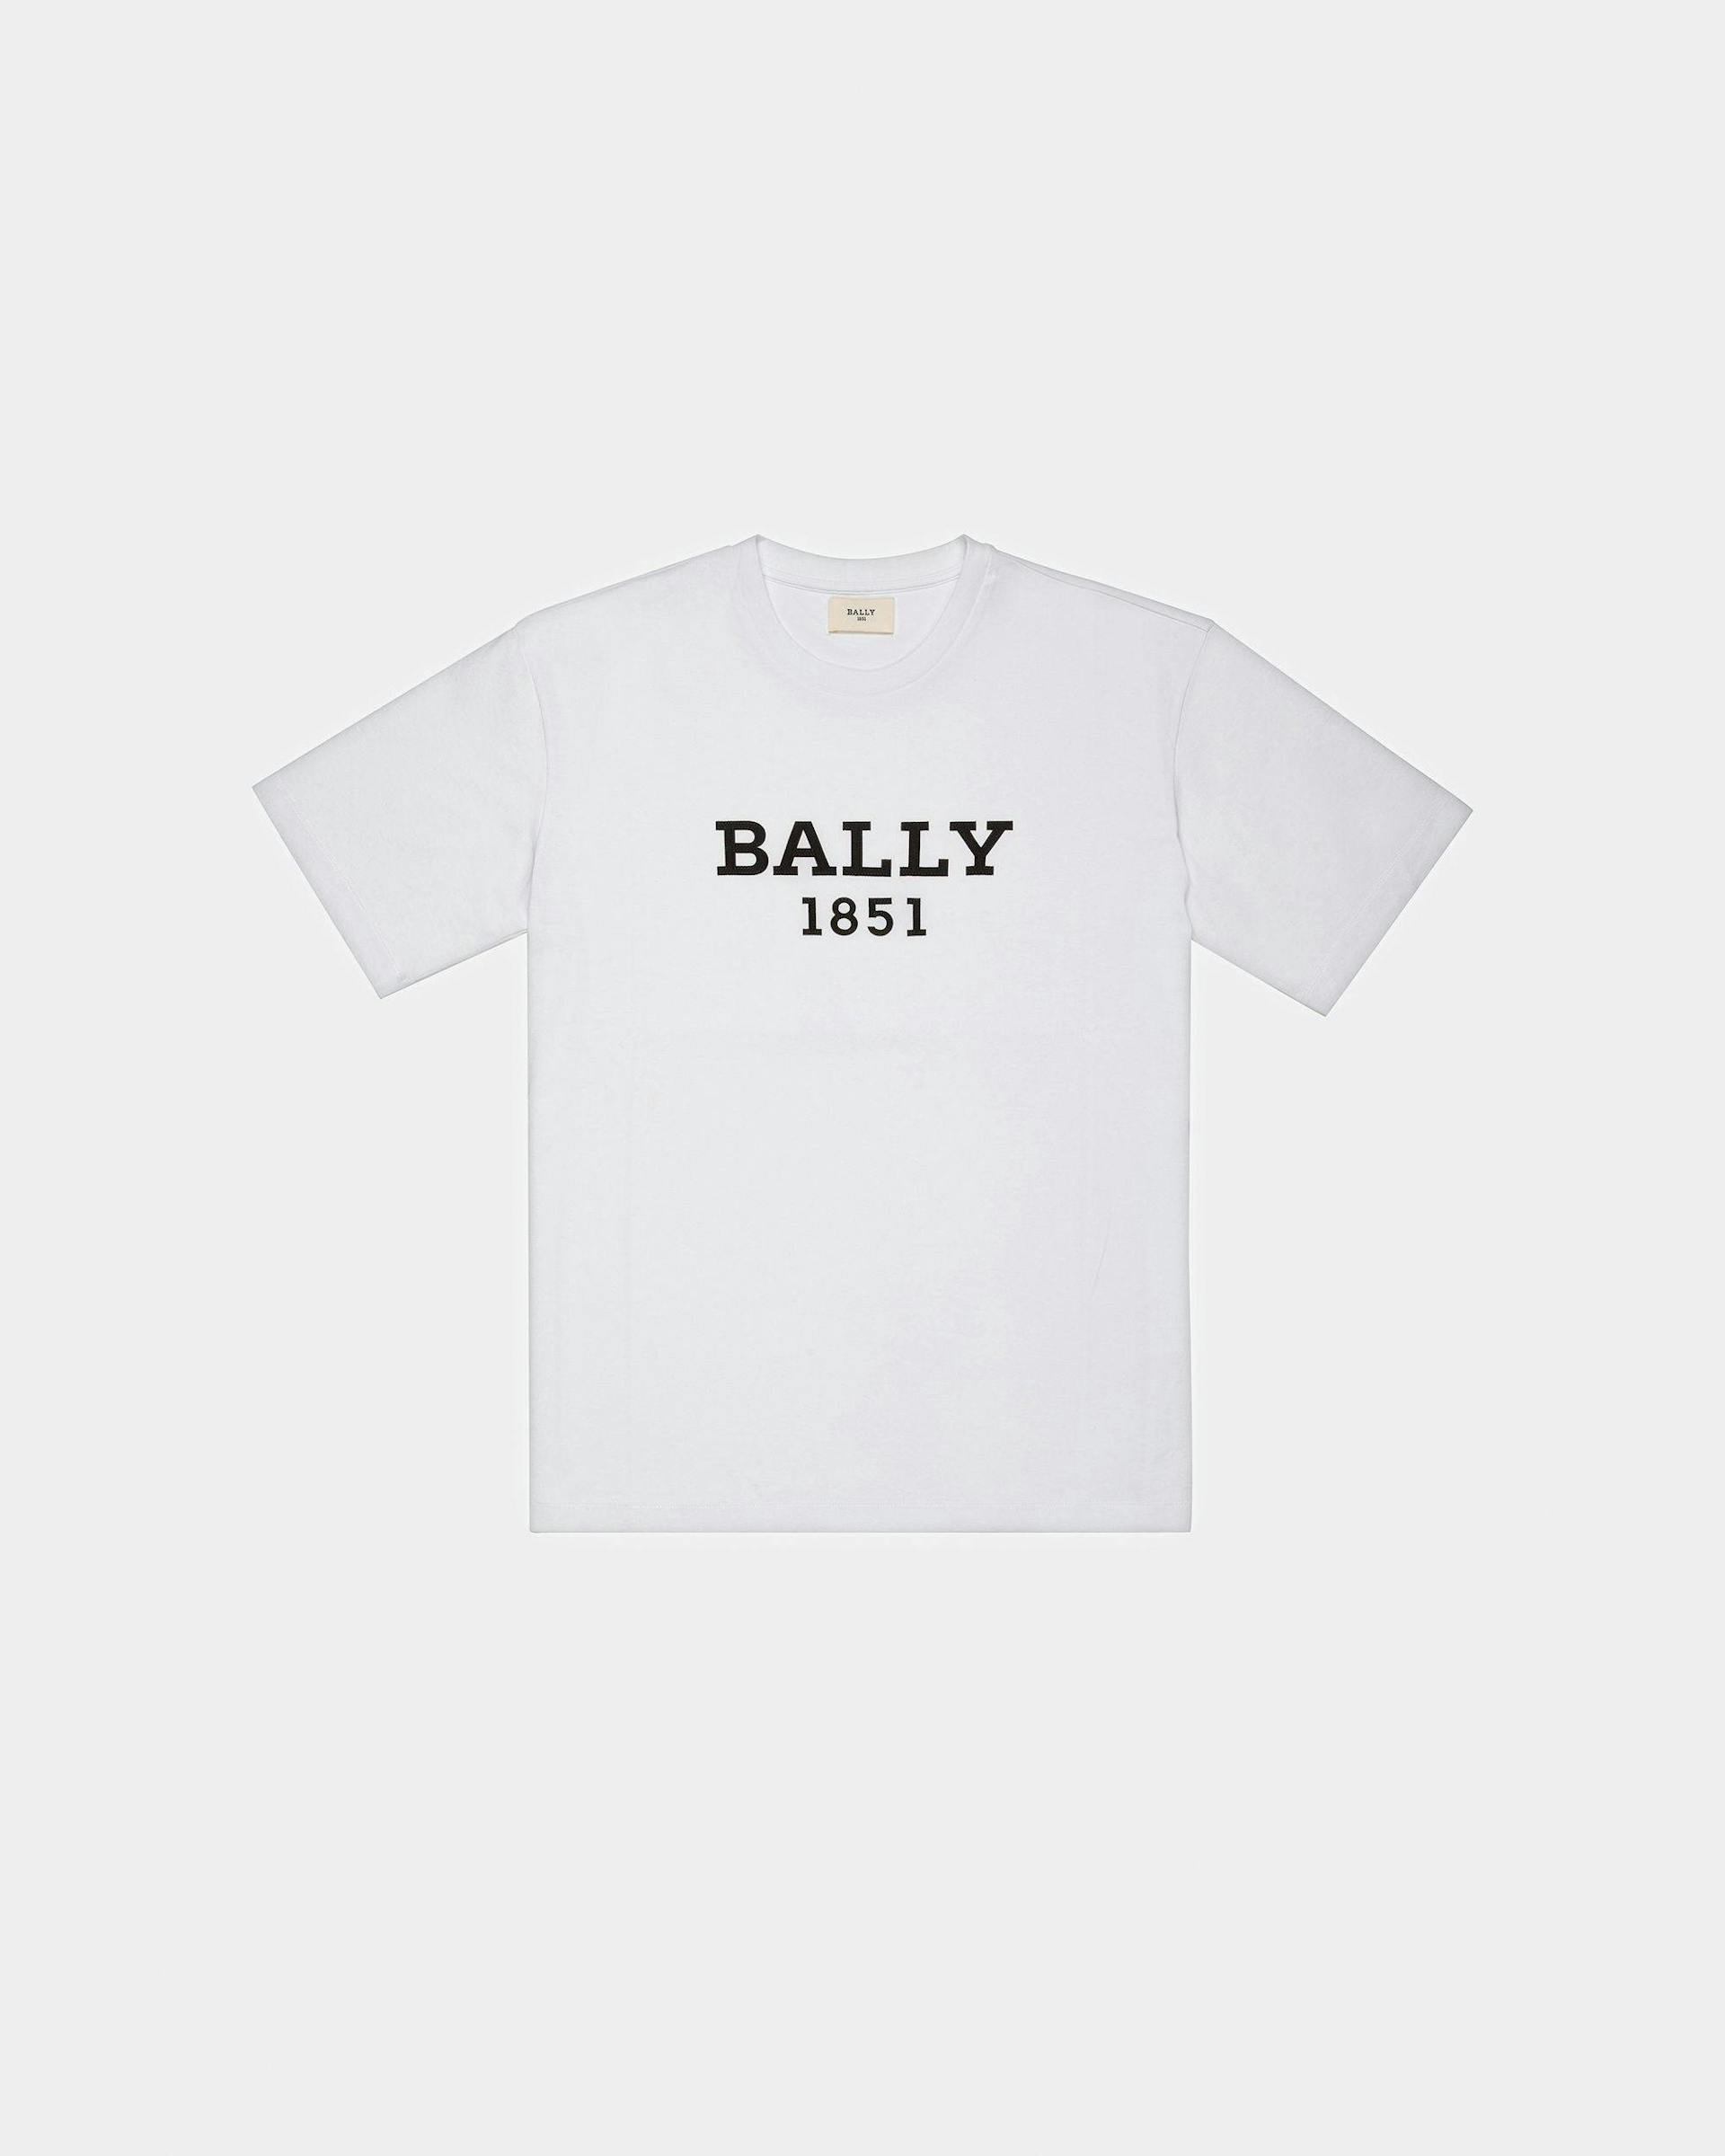 Bally 1851 T-Shirt In Cotone Biologico Bianco - Uomo - Bally - 01